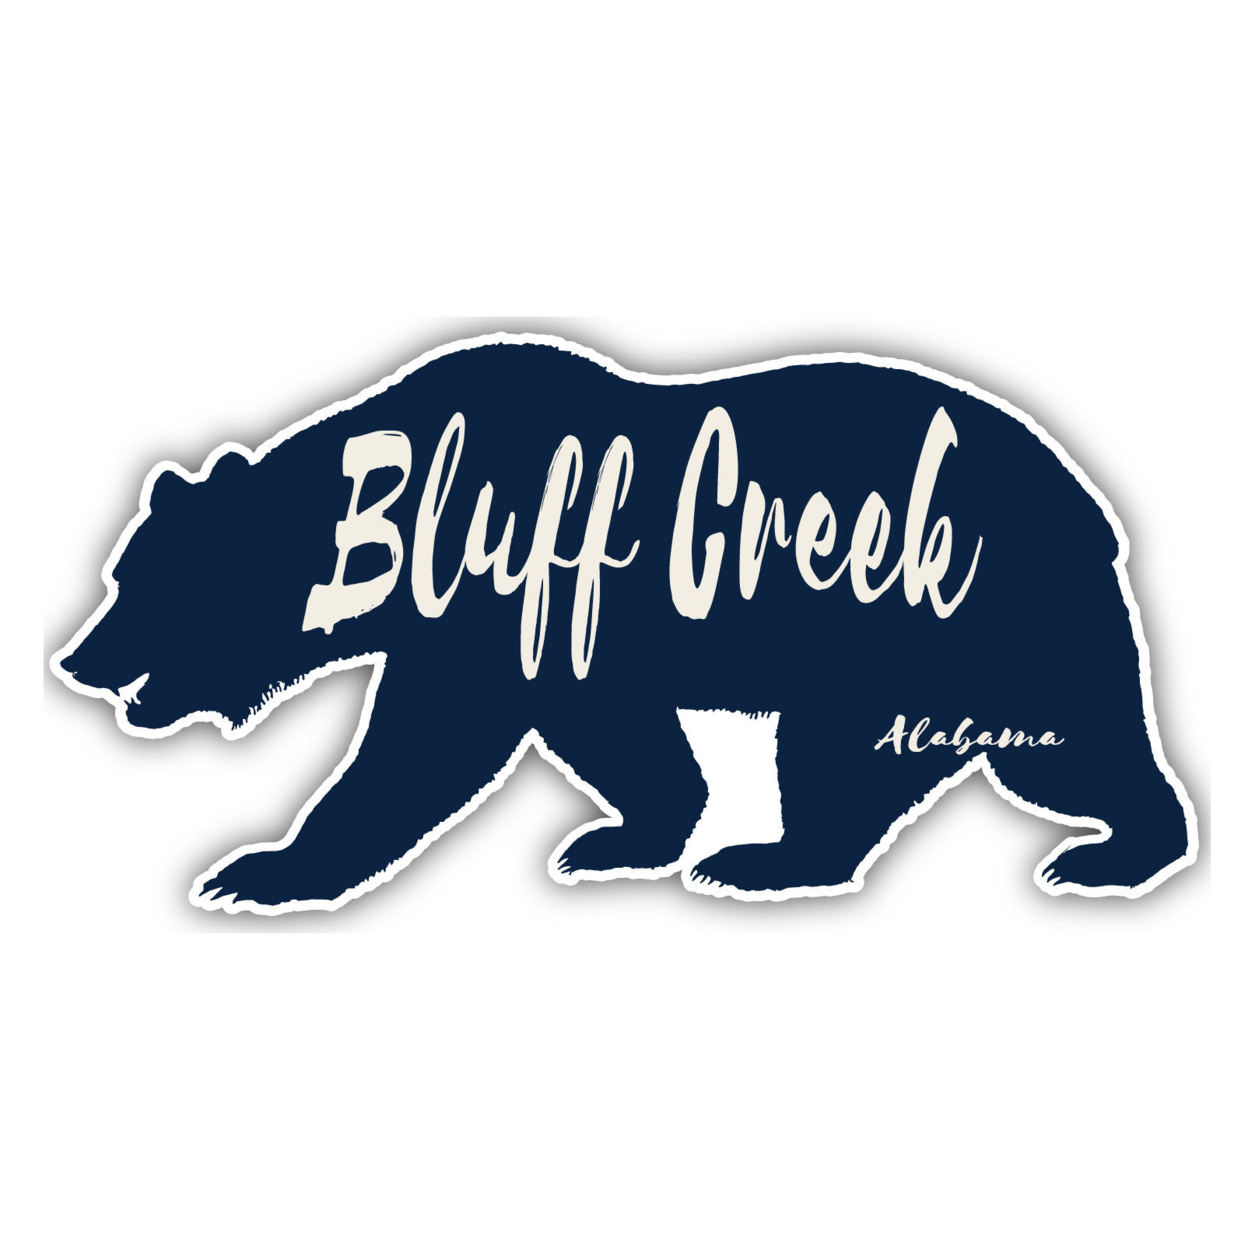 Bluff Creek Alabama Souvenir Decorative Stickers (Choose Theme And Size) - 4-Pack, 2-Inch, Bear